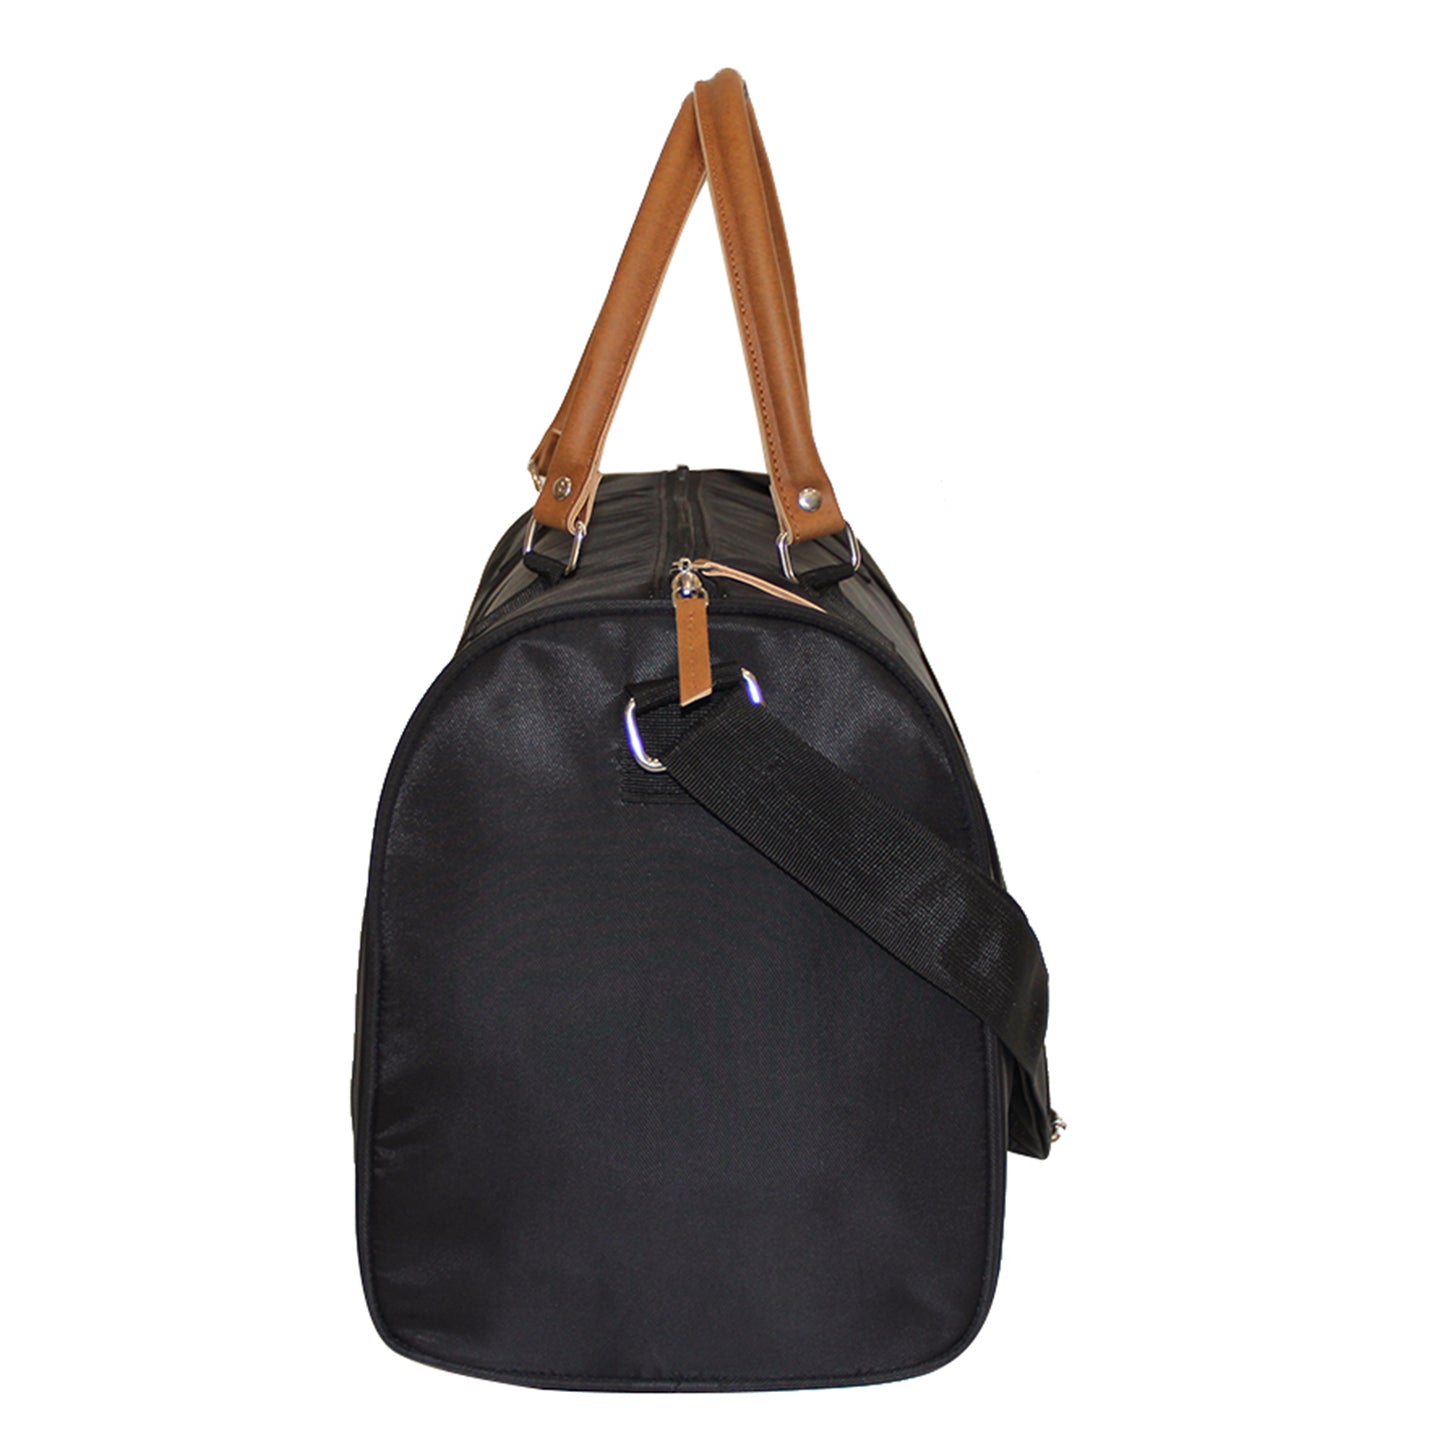 Basic Black Duffle Bag